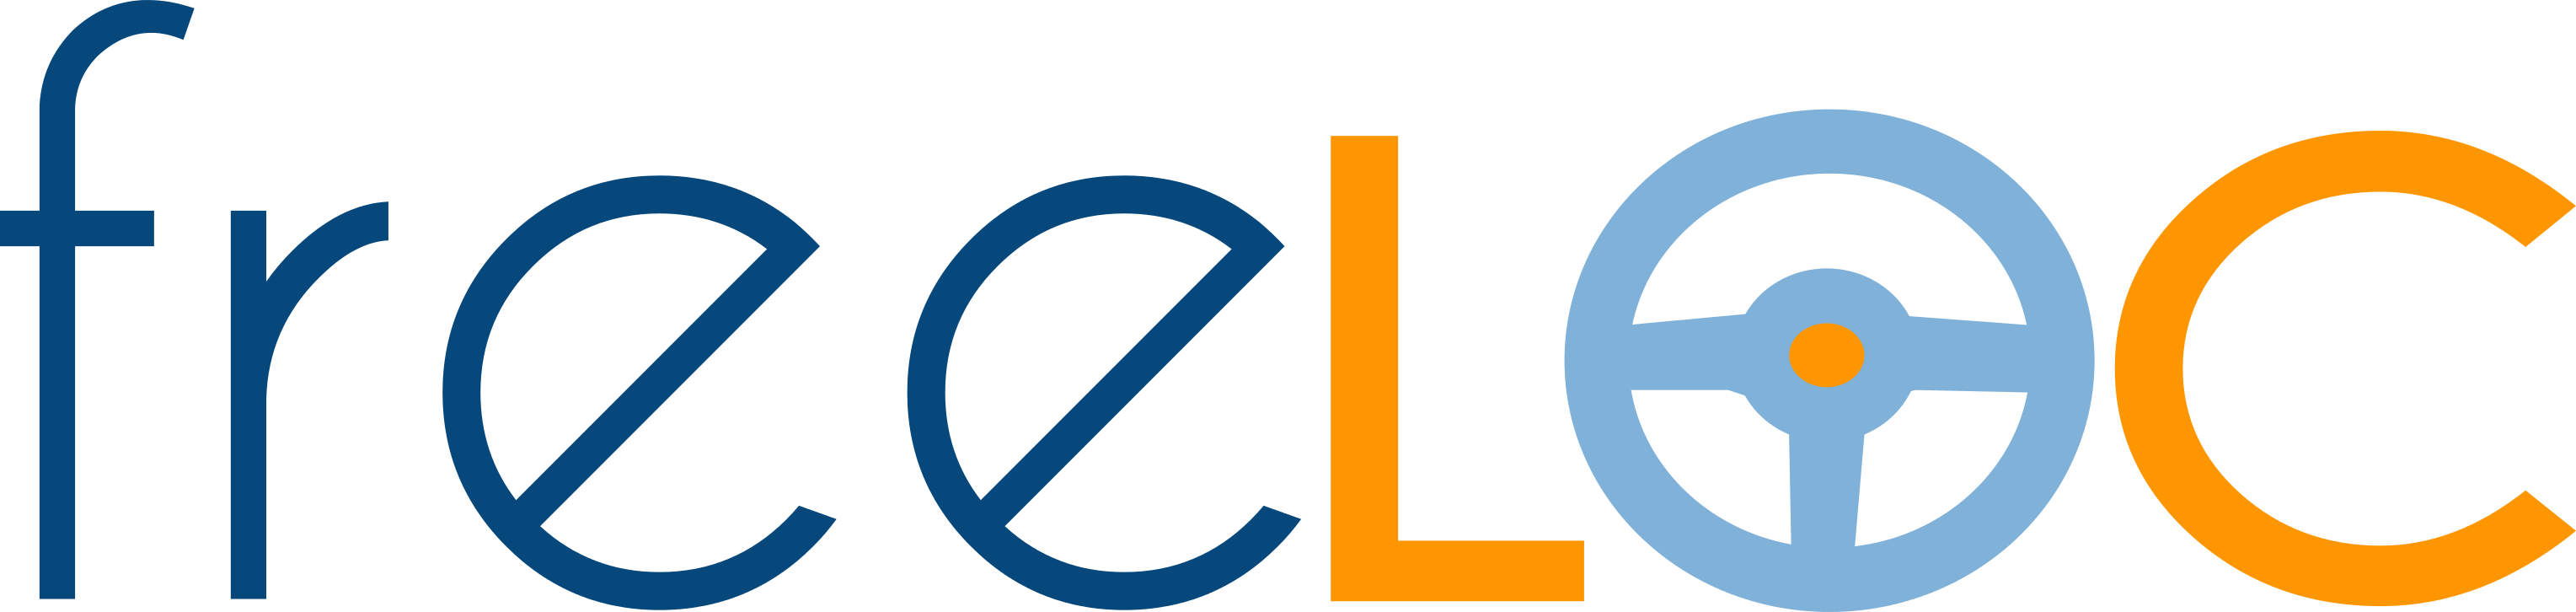 Logo Freeloc